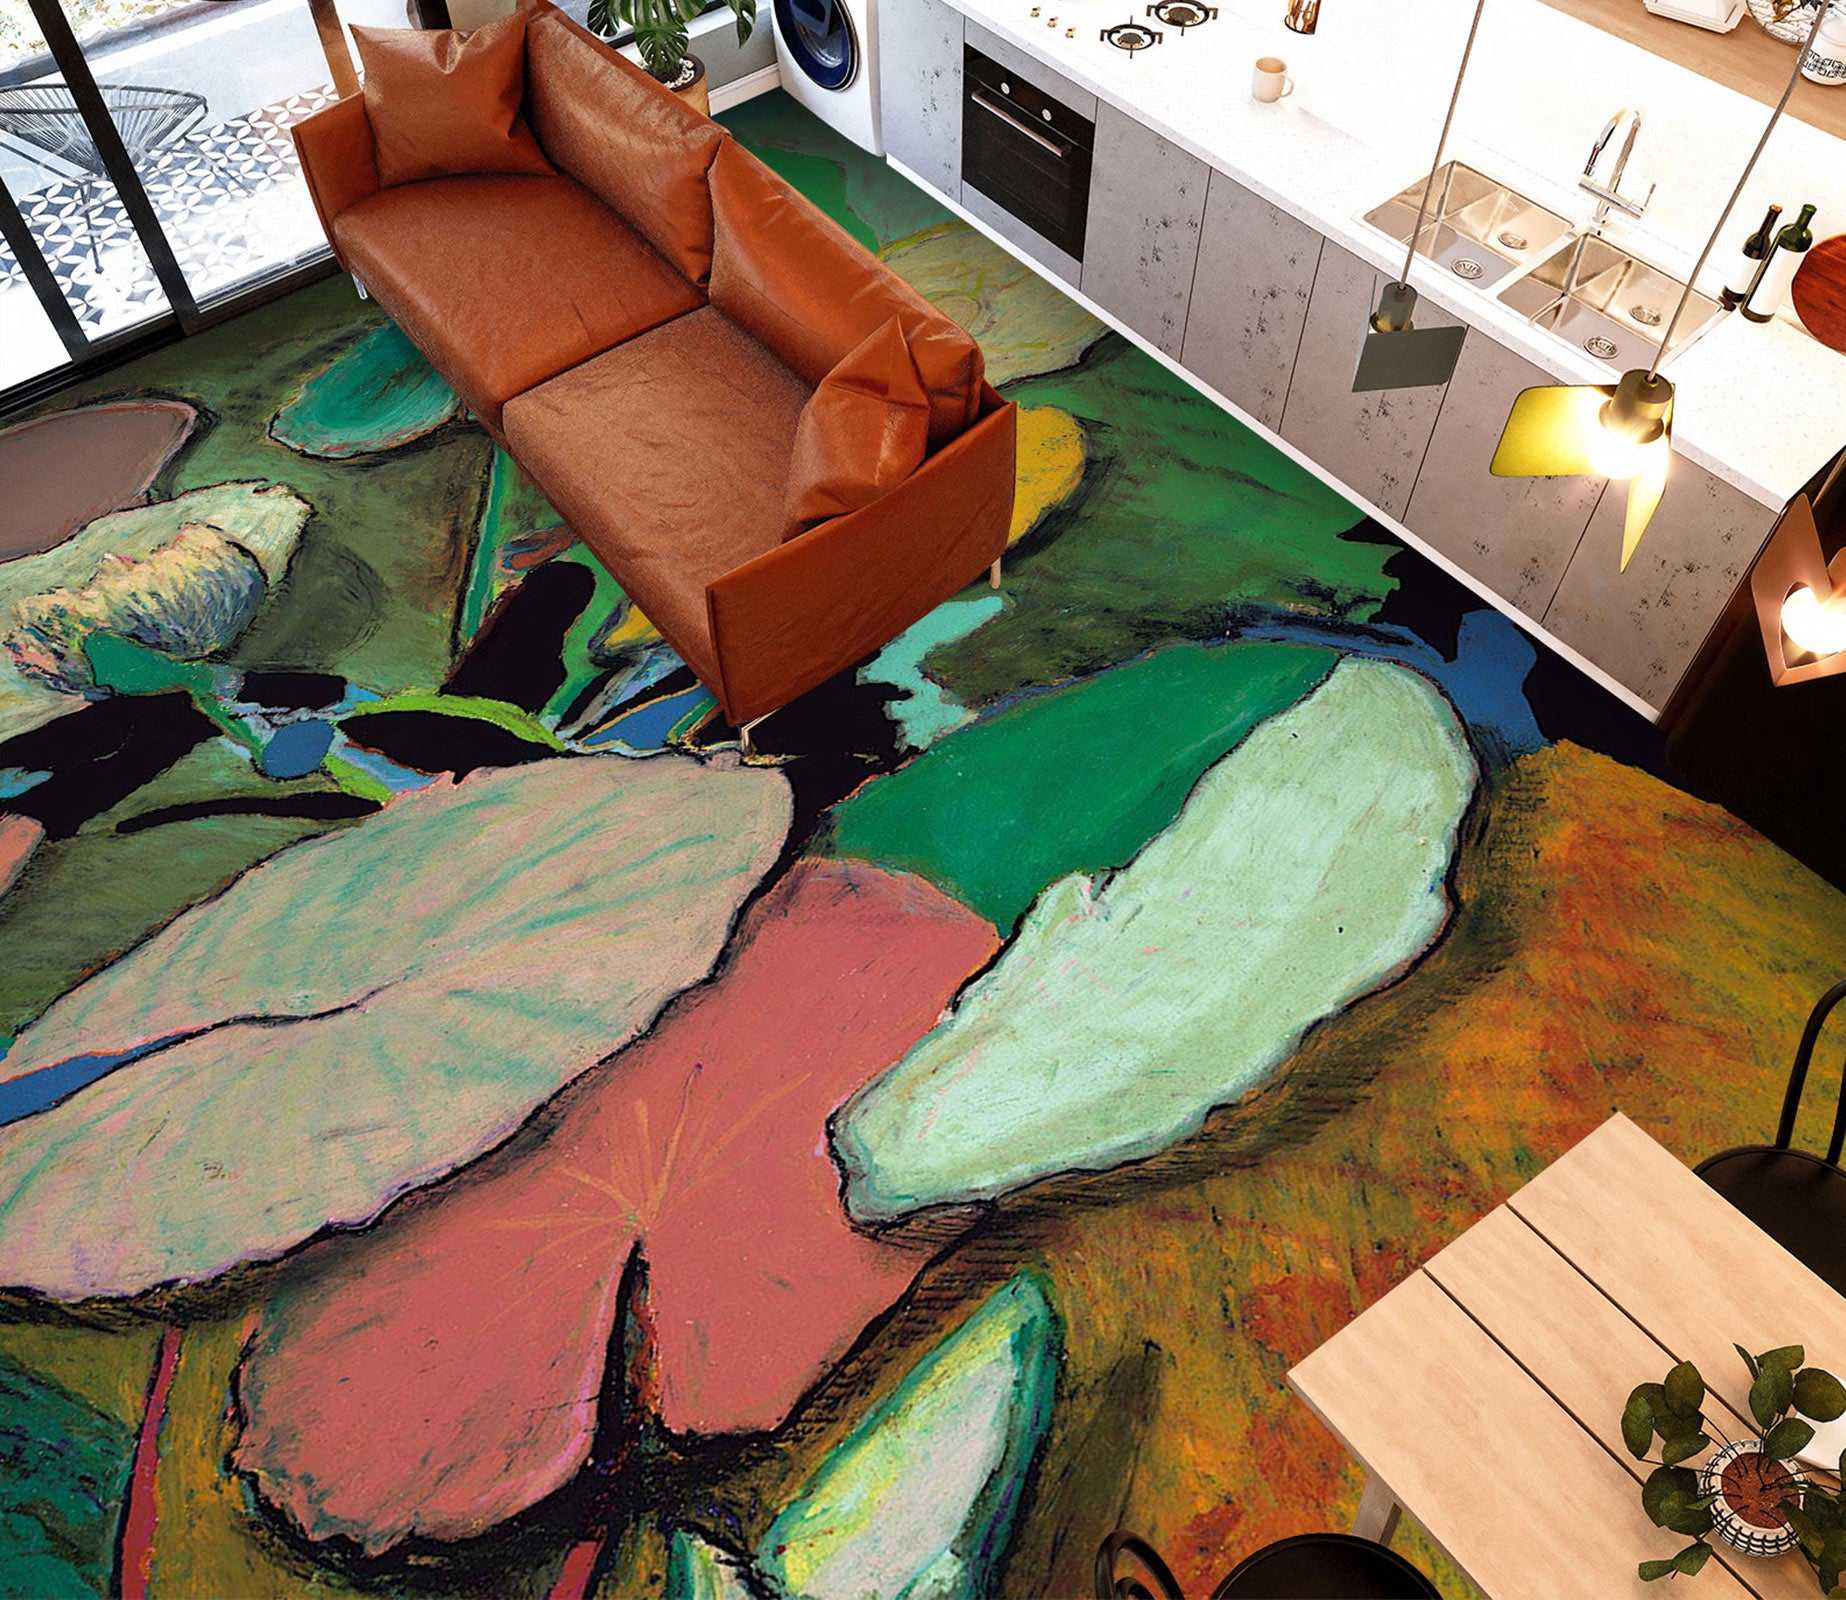 3D Lotus Leaf Painting 96127 Allan P. Friedlander Floor Mural  Wallpaper Murals Self-Adhesive Removable Print Epoxy